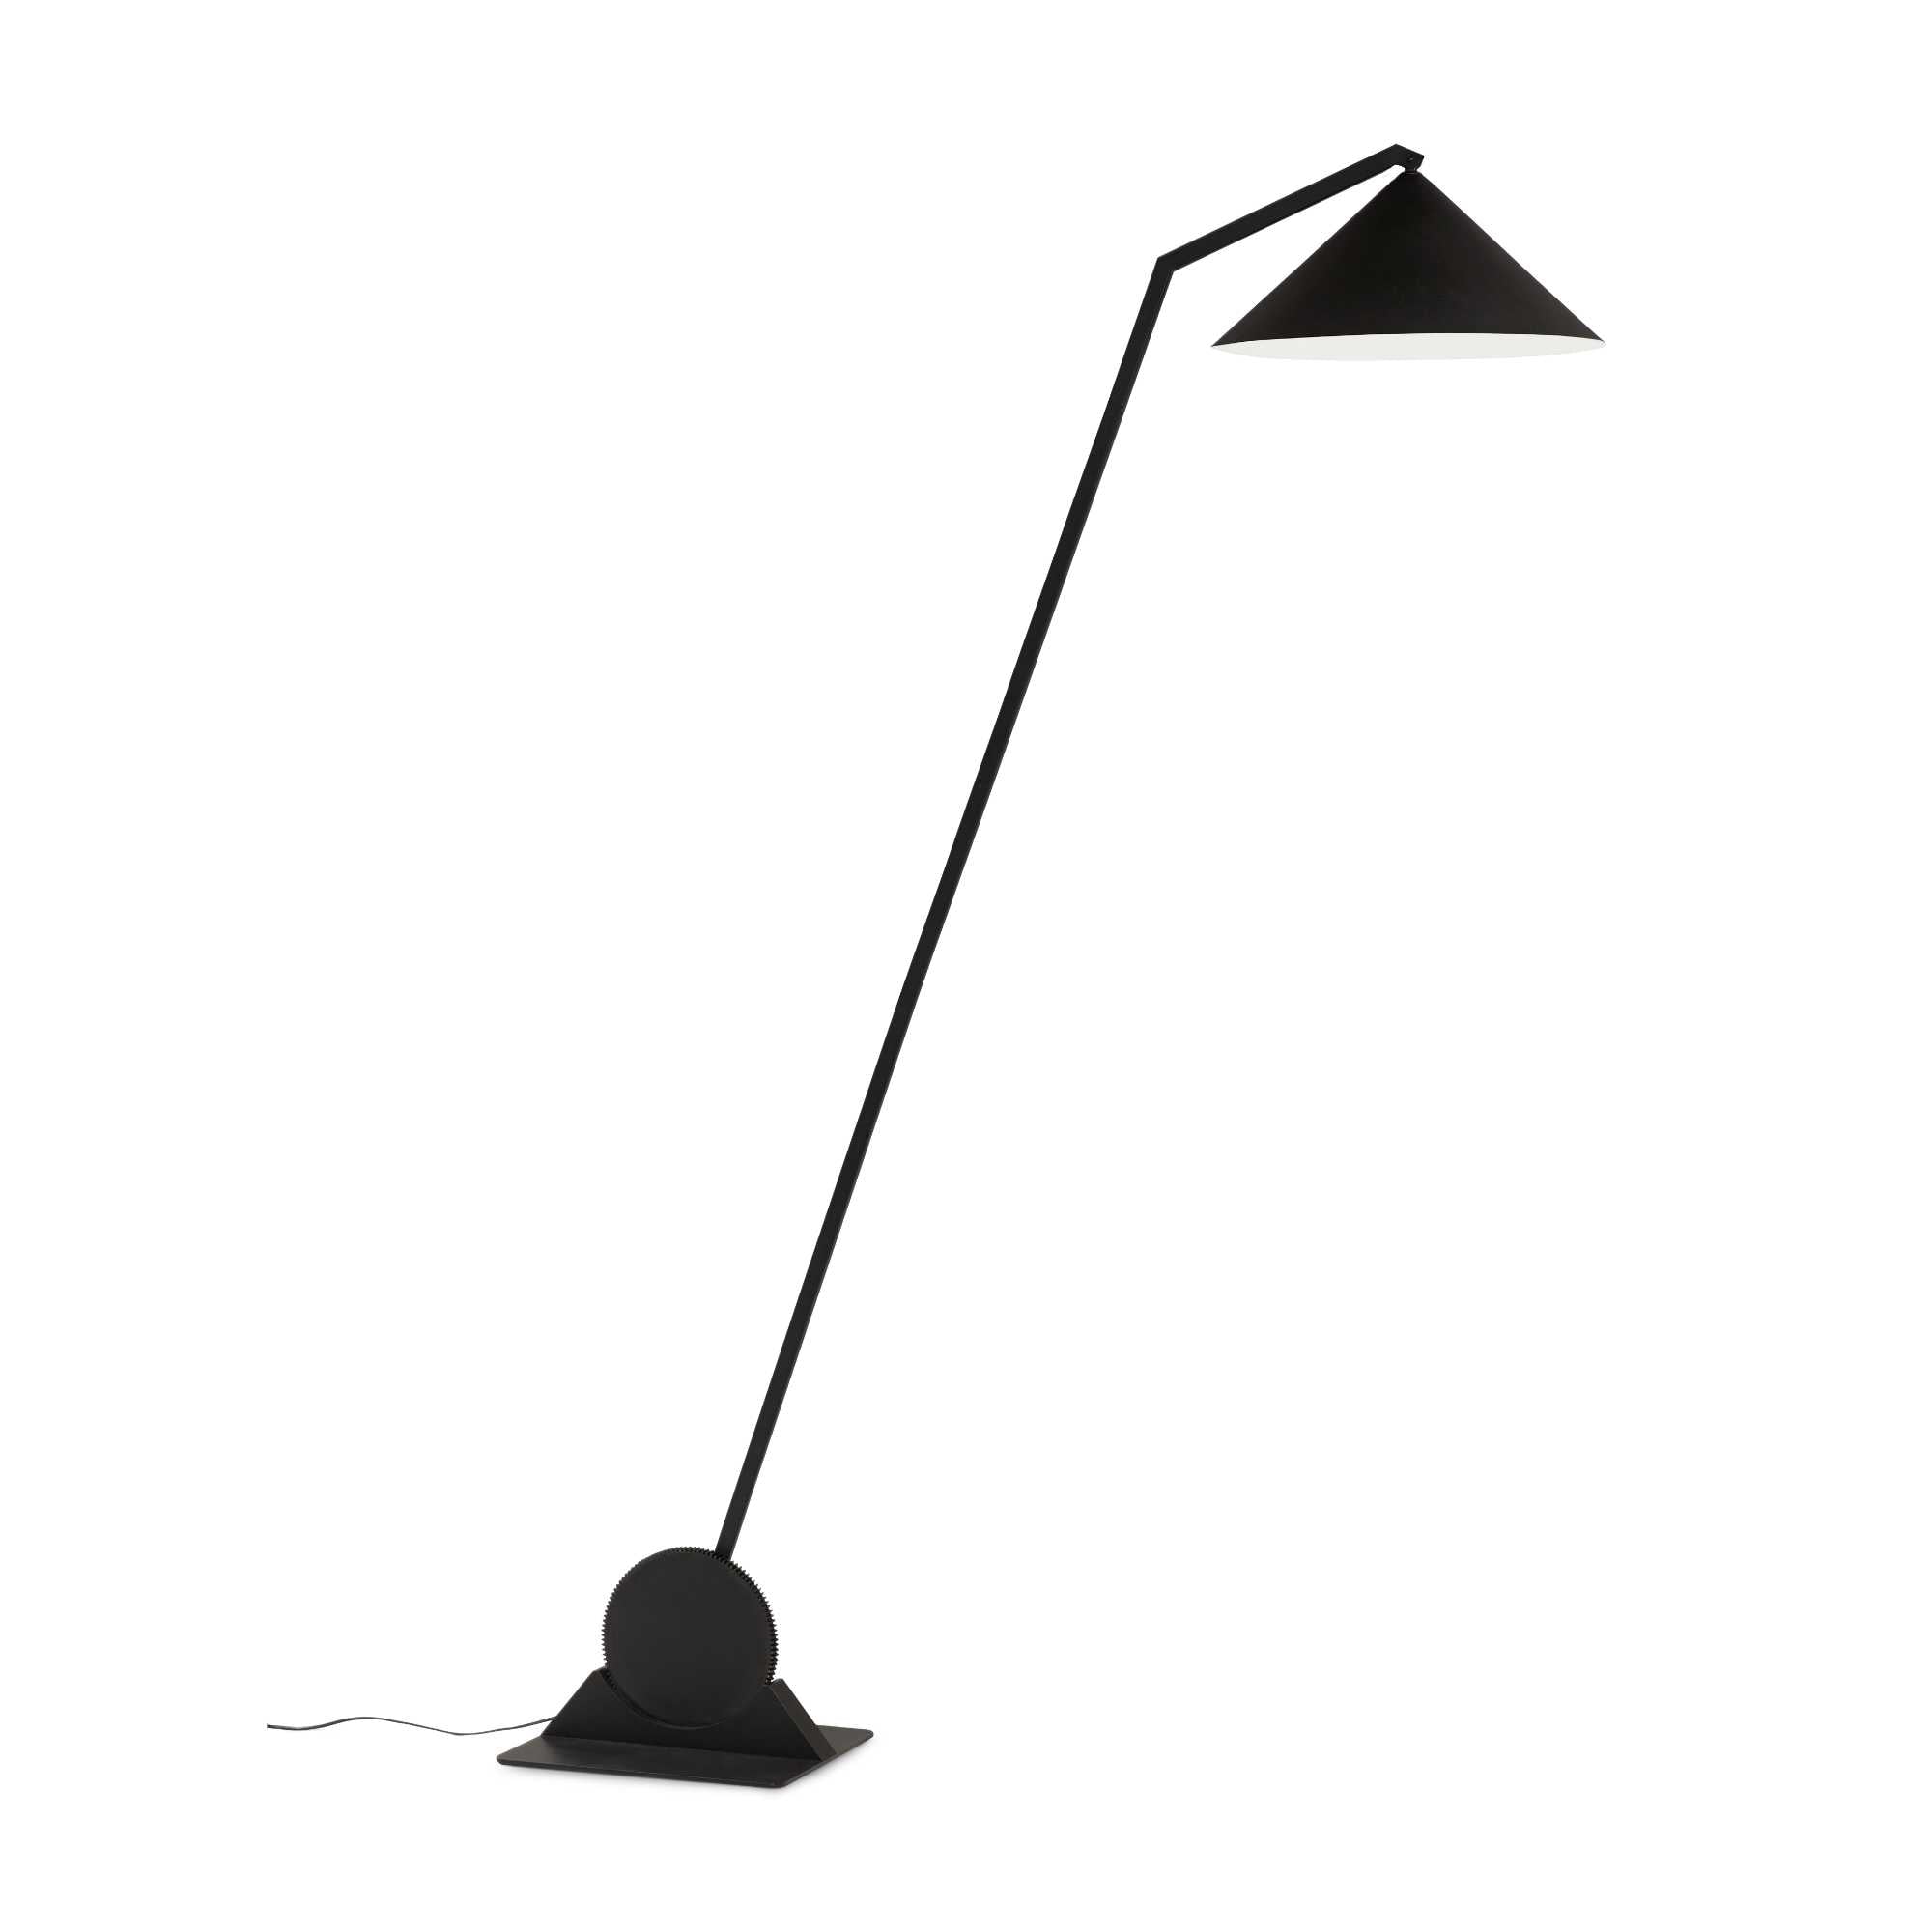 Northern Gear floor lamp